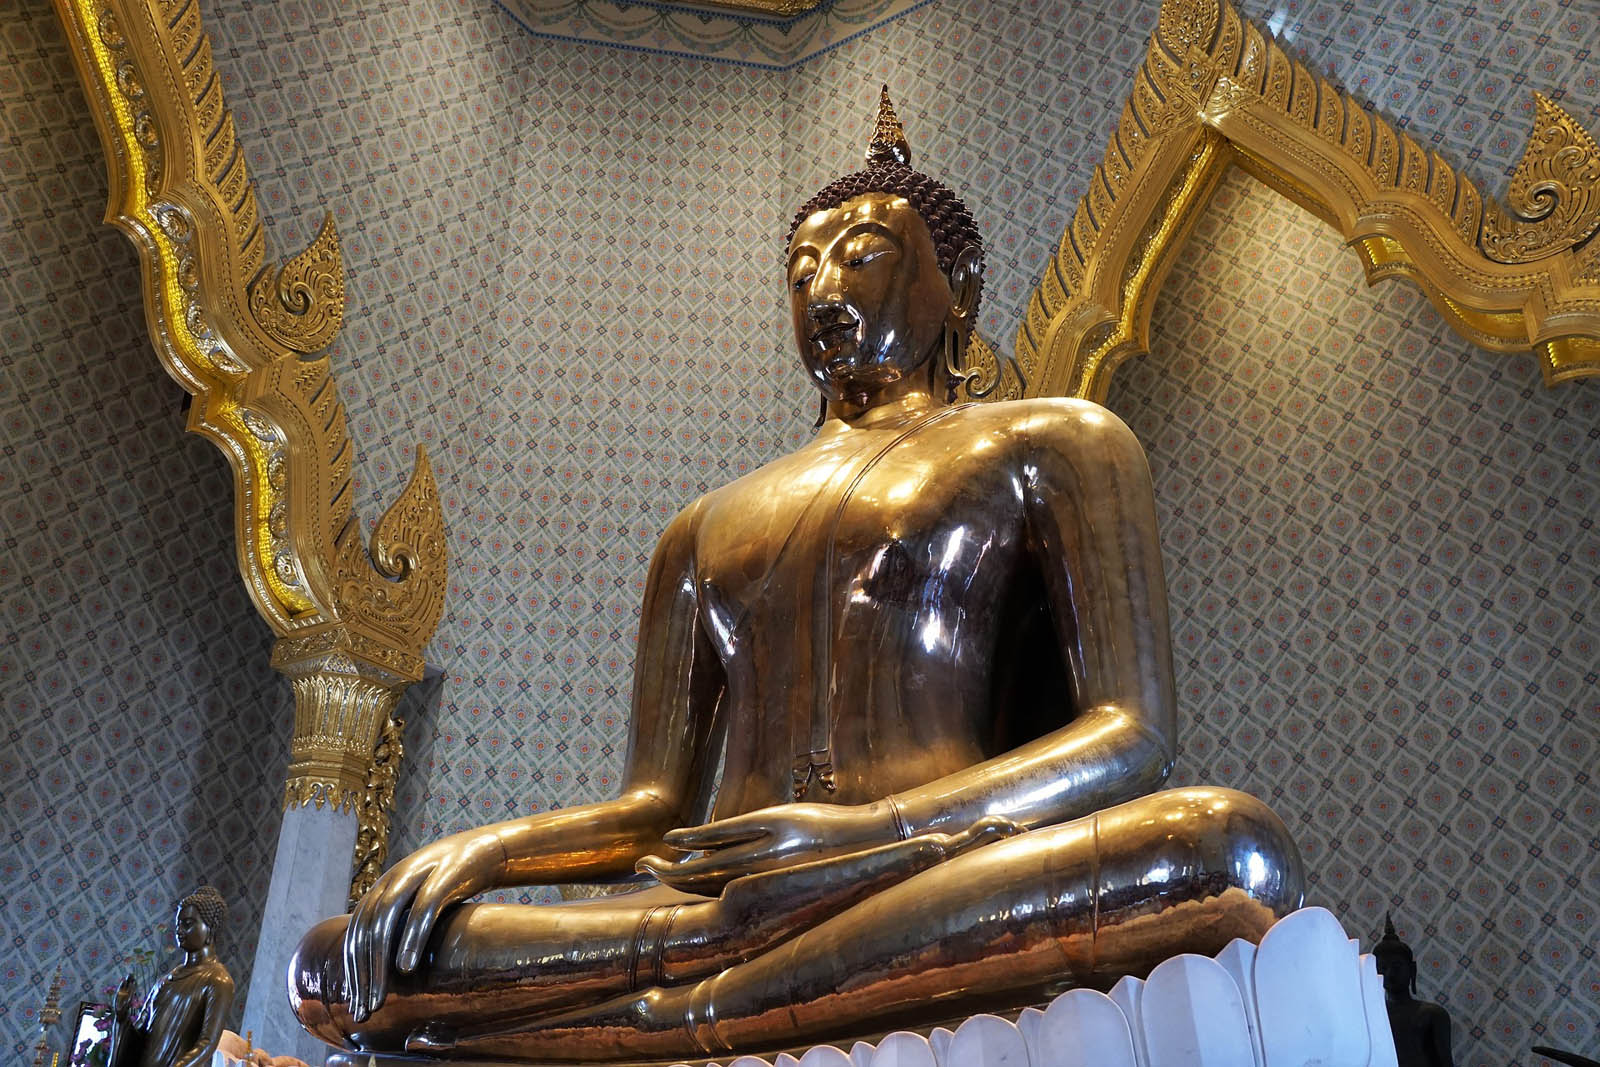 fun thailand facts world's largest golden buddha